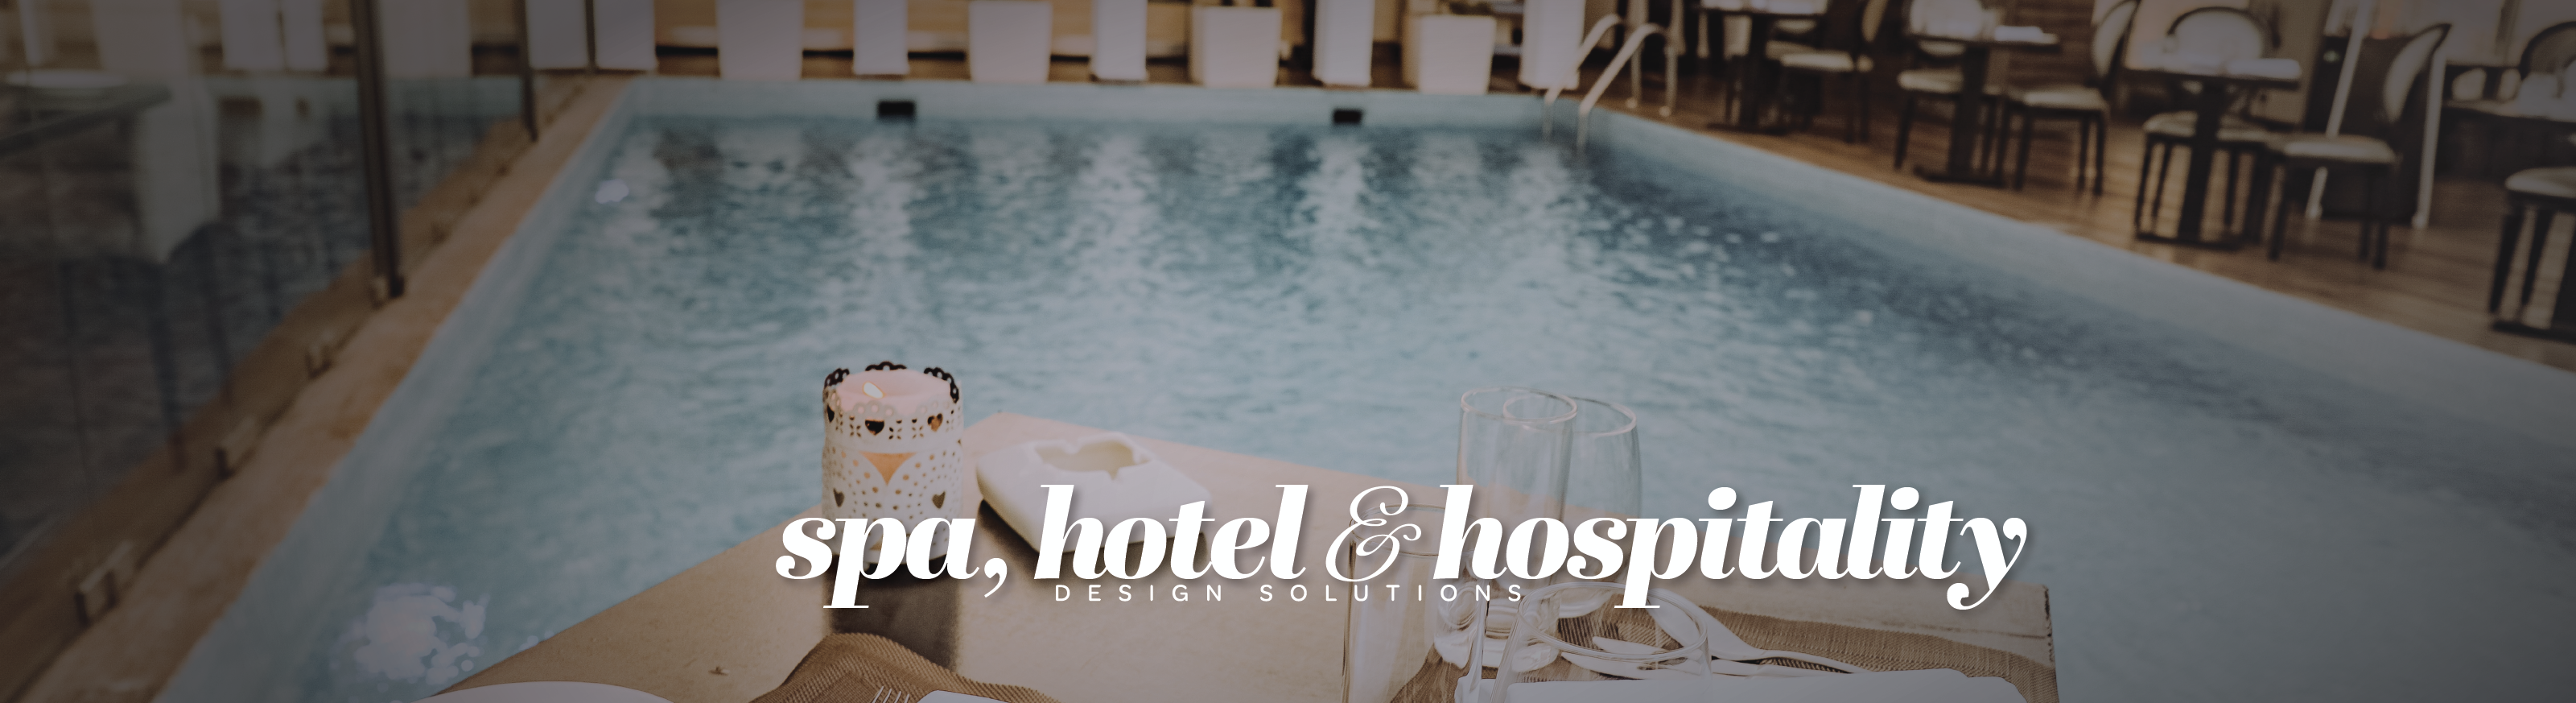 spas hotel hospitality marketing brand design signage towels uniforms namecards advertising design hotels